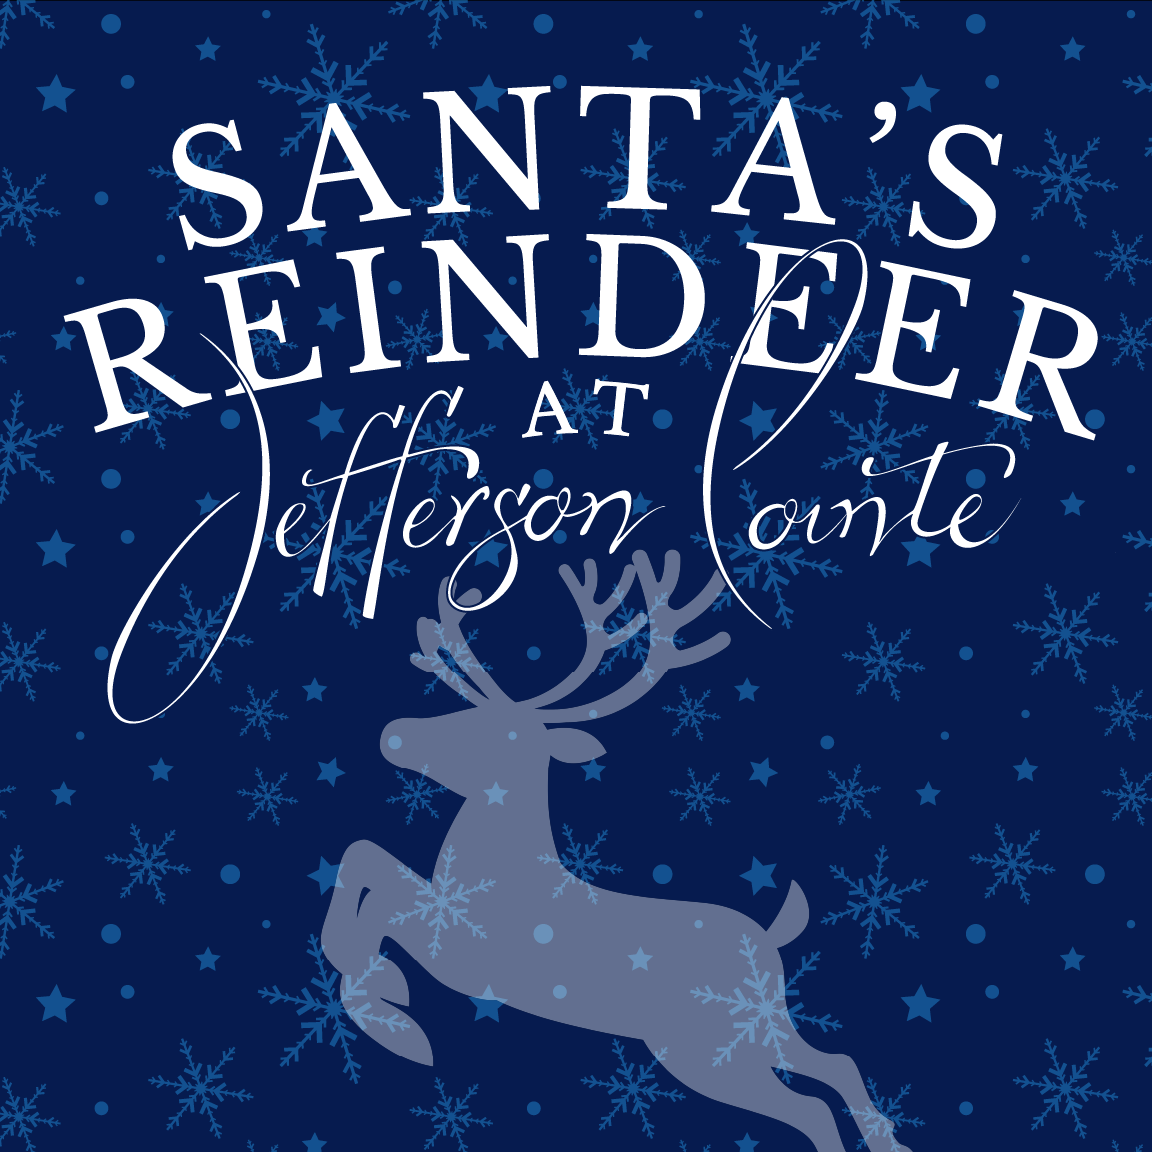 Live Reindeer at Jefferson Pointe